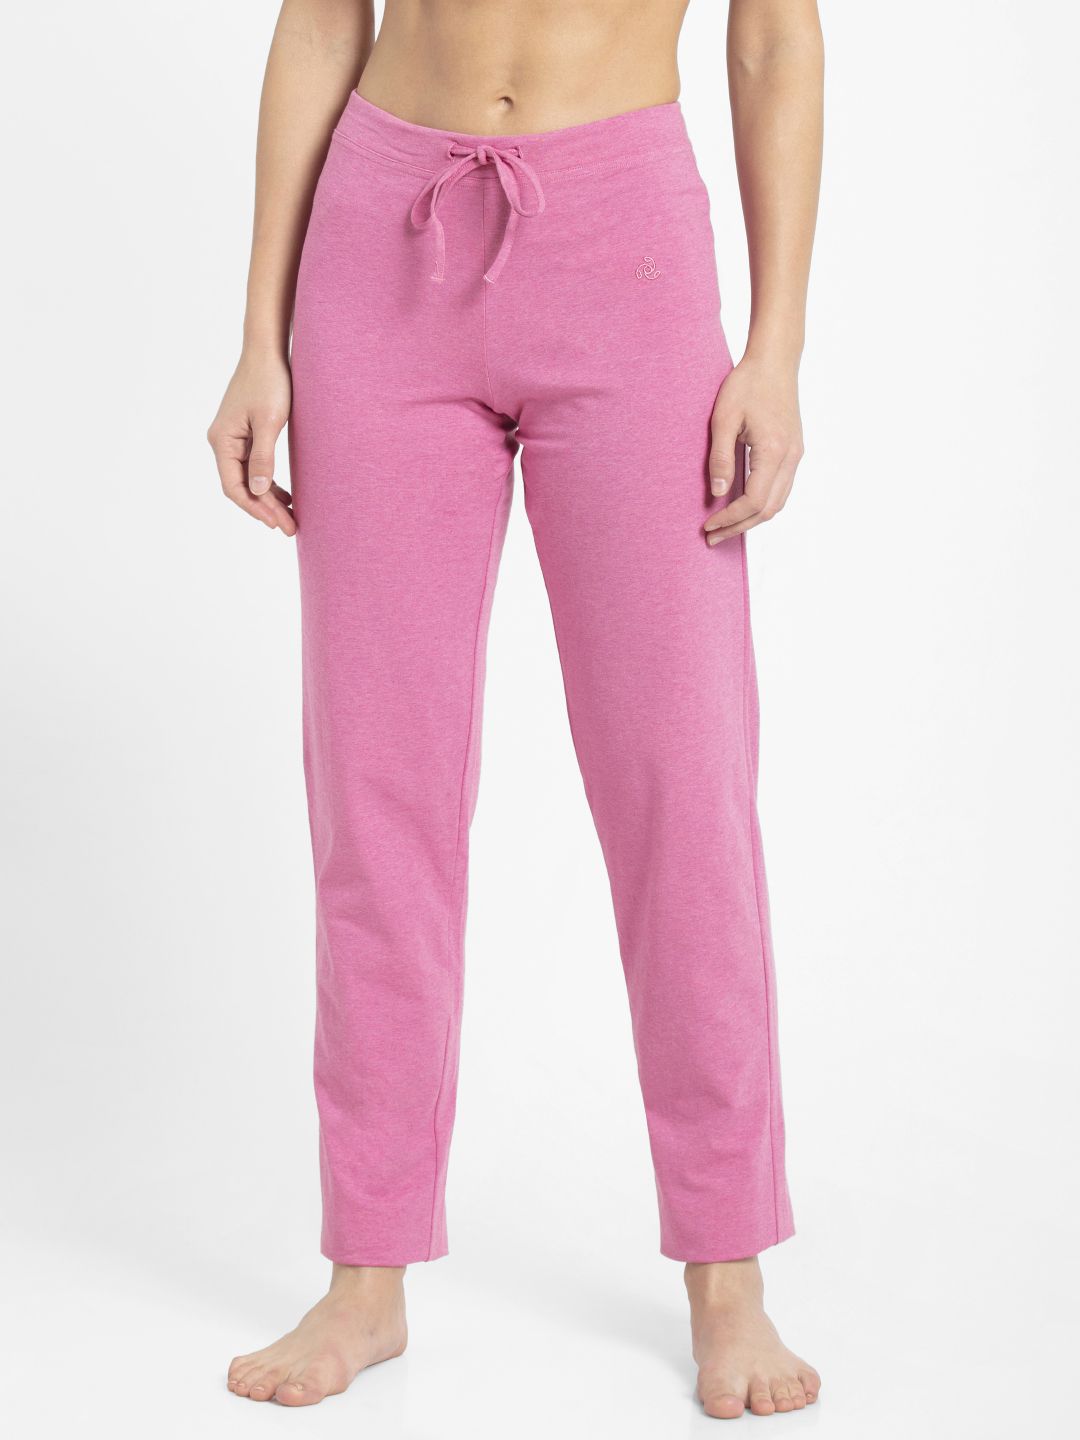 Jockey Women Pink Solid Slim Fit Lounge Pants 1301 Price in India